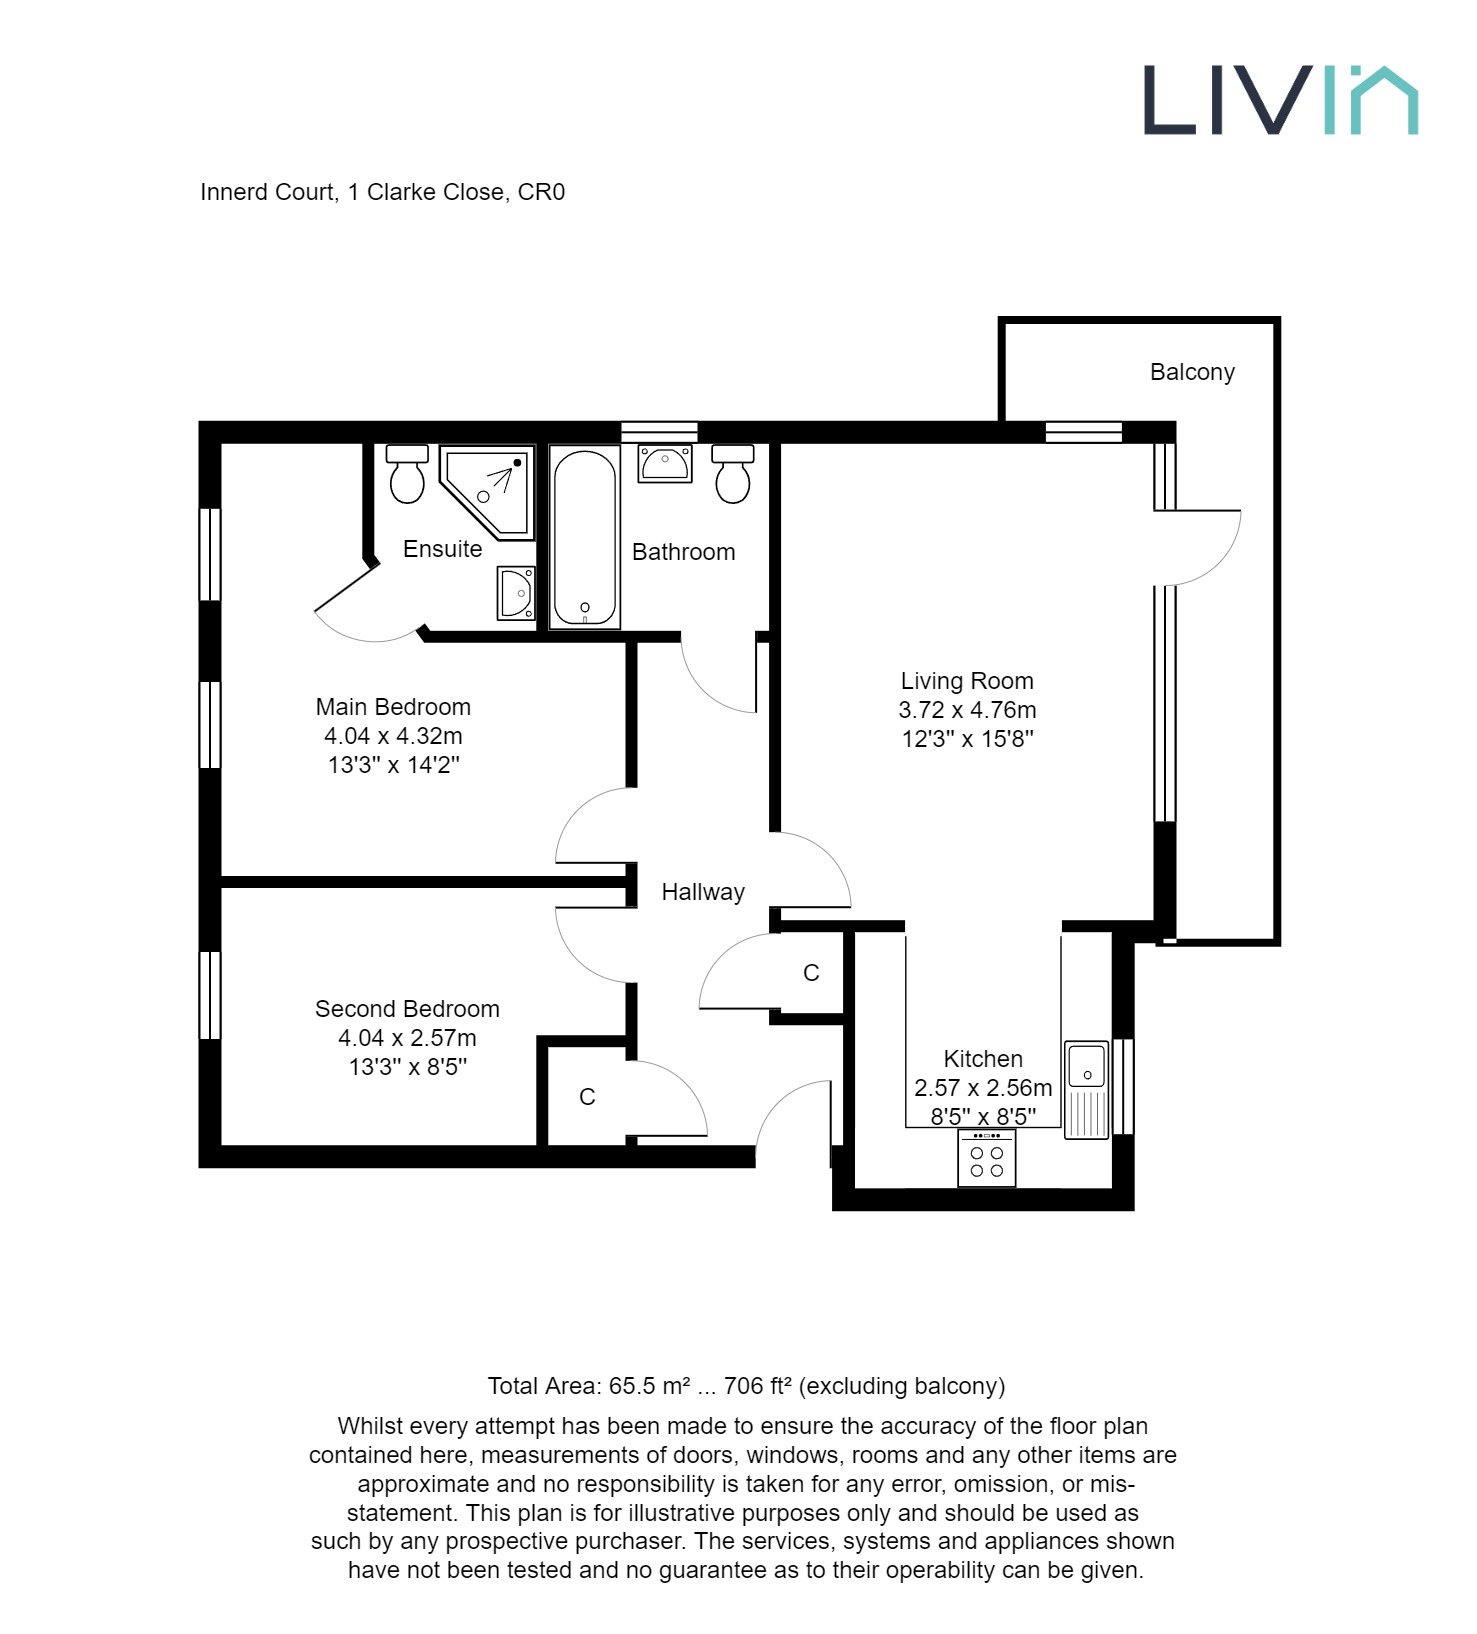 2 bed apartment for sale in Innerd Court, Croydon - Property floorplan